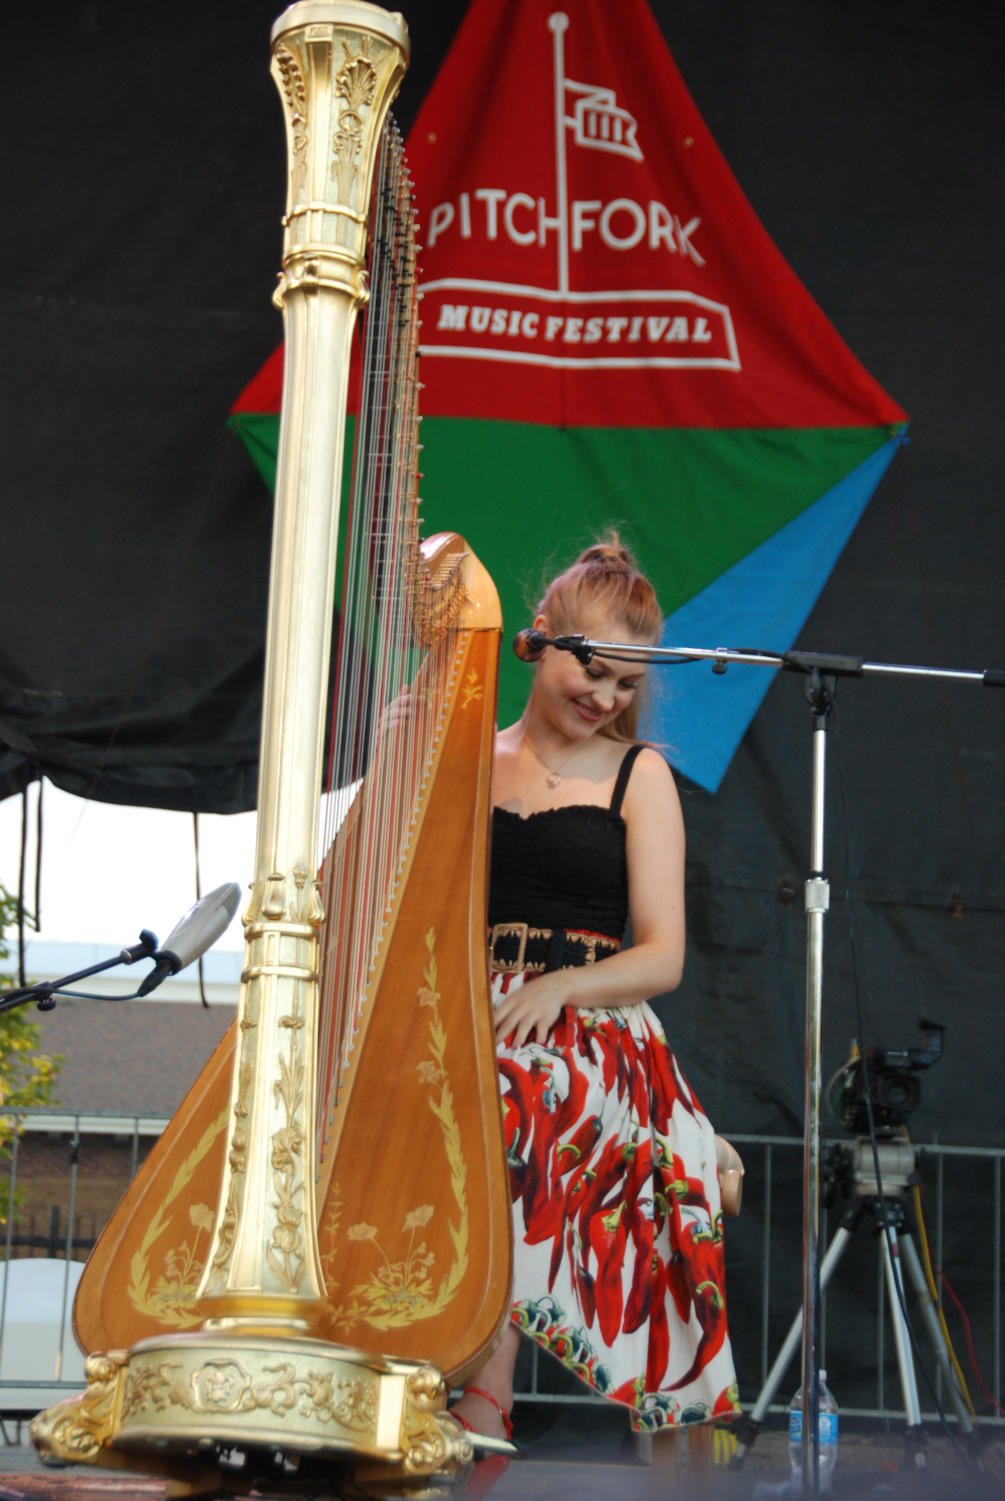 Joanna Newsom performs on the harp.